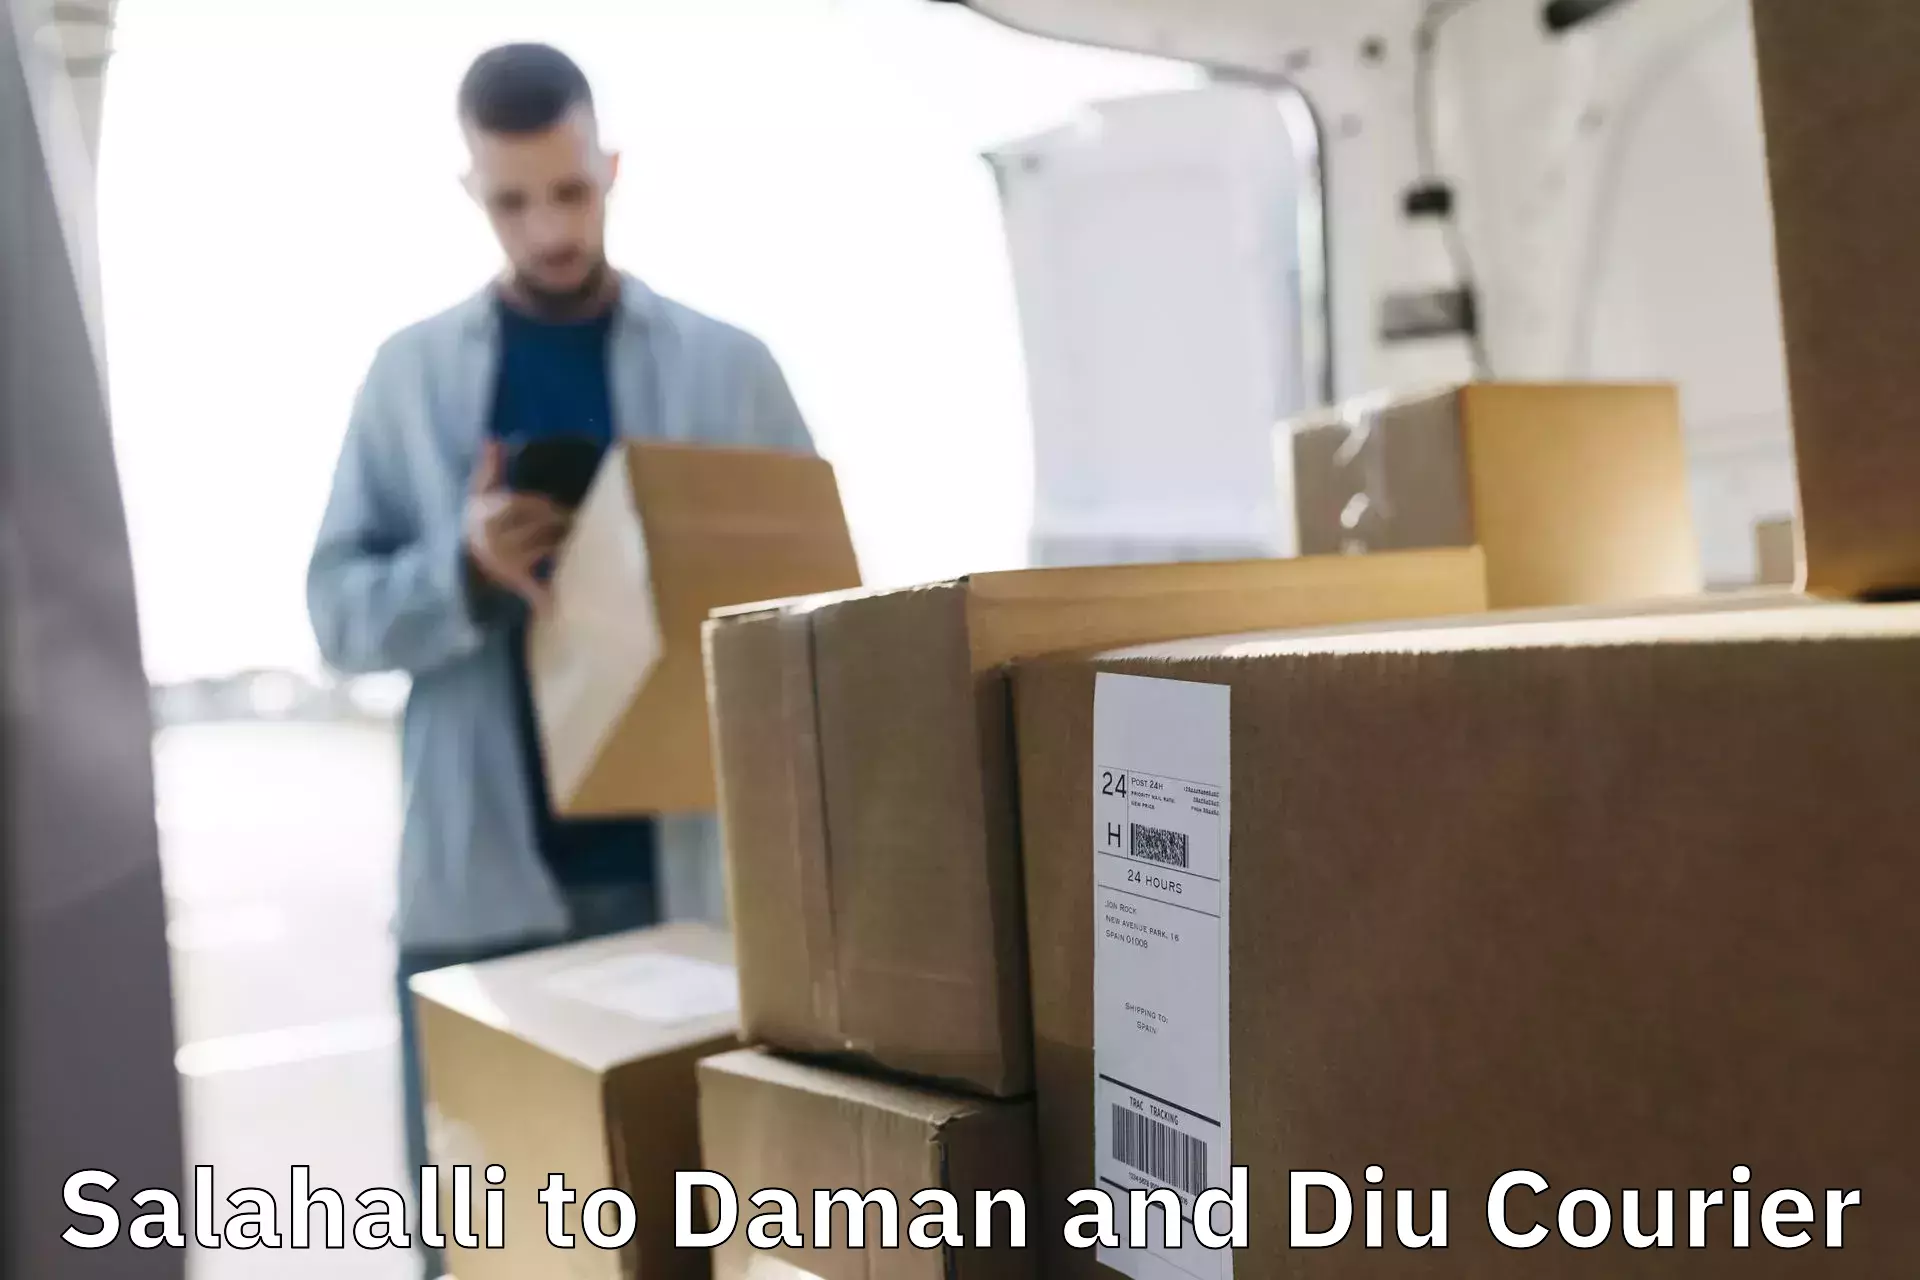 On-demand delivery Salahalli to Diu